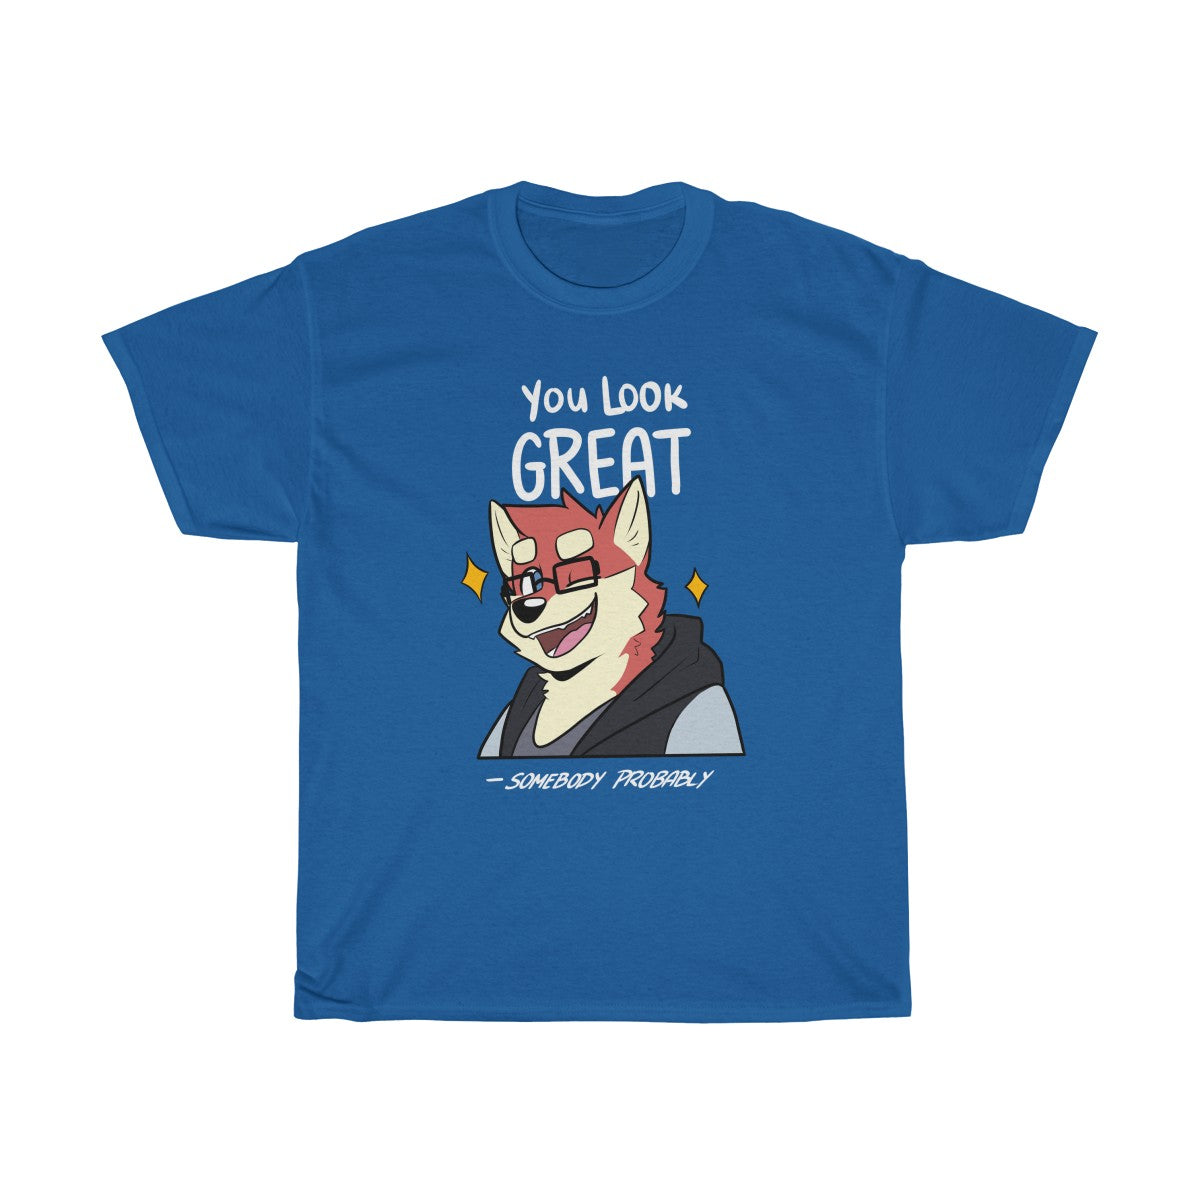 You Look Great - T-Shirt T-Shirt Ooka Royal Blue S 